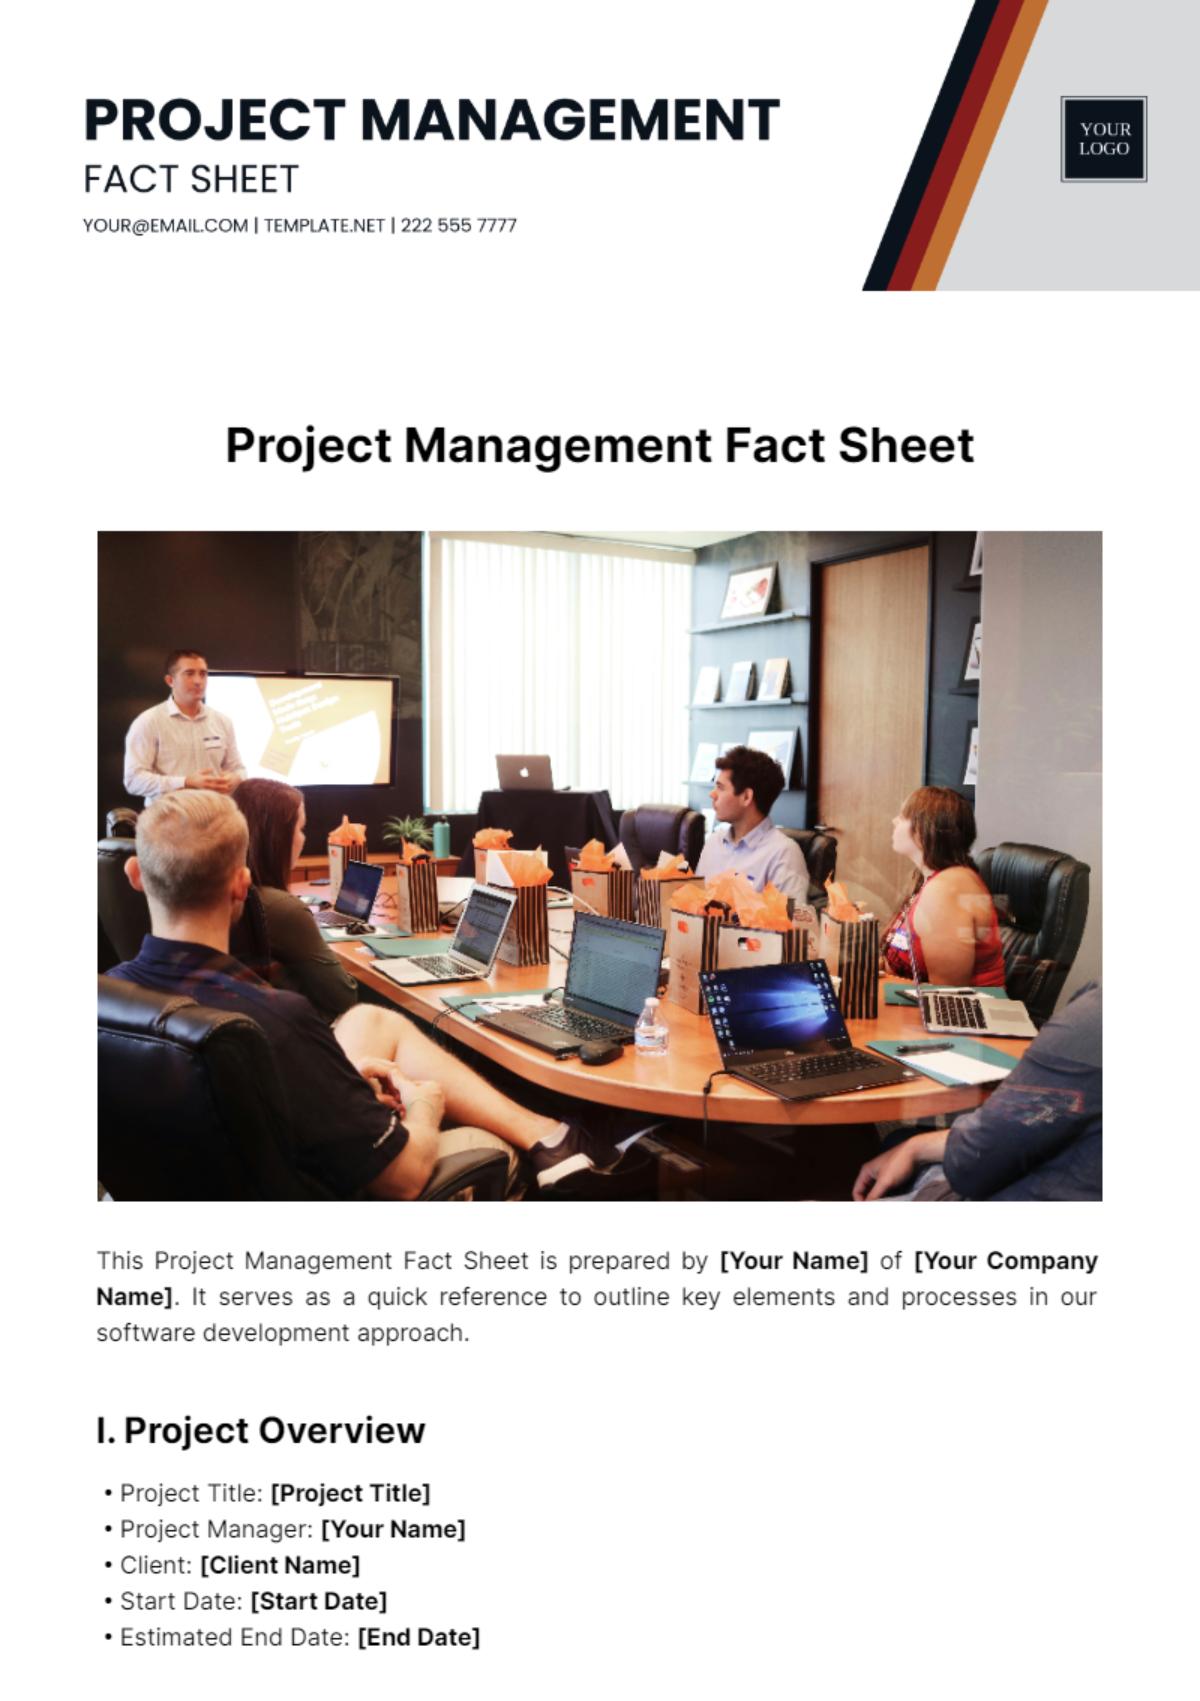 Project Management Fact Sheet Template